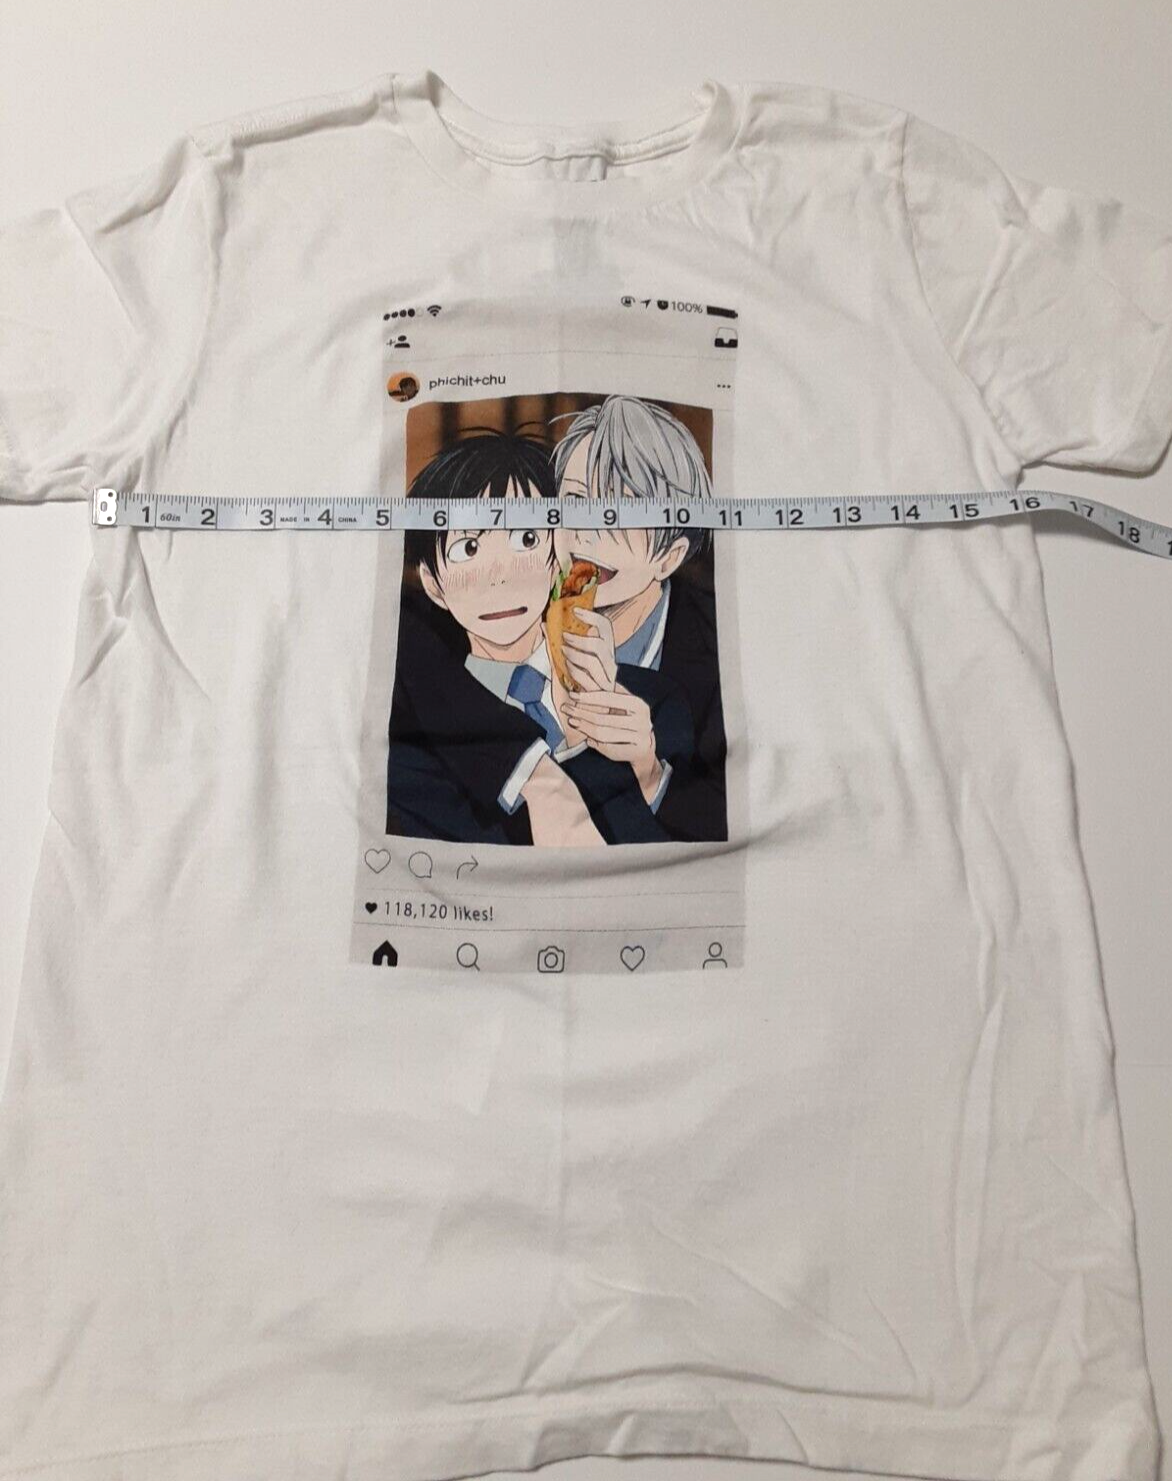 Yuri on Ice Crunchyroll Phichit + Chu Anime T-shirt Size XS XSmall White  Tee | eBay